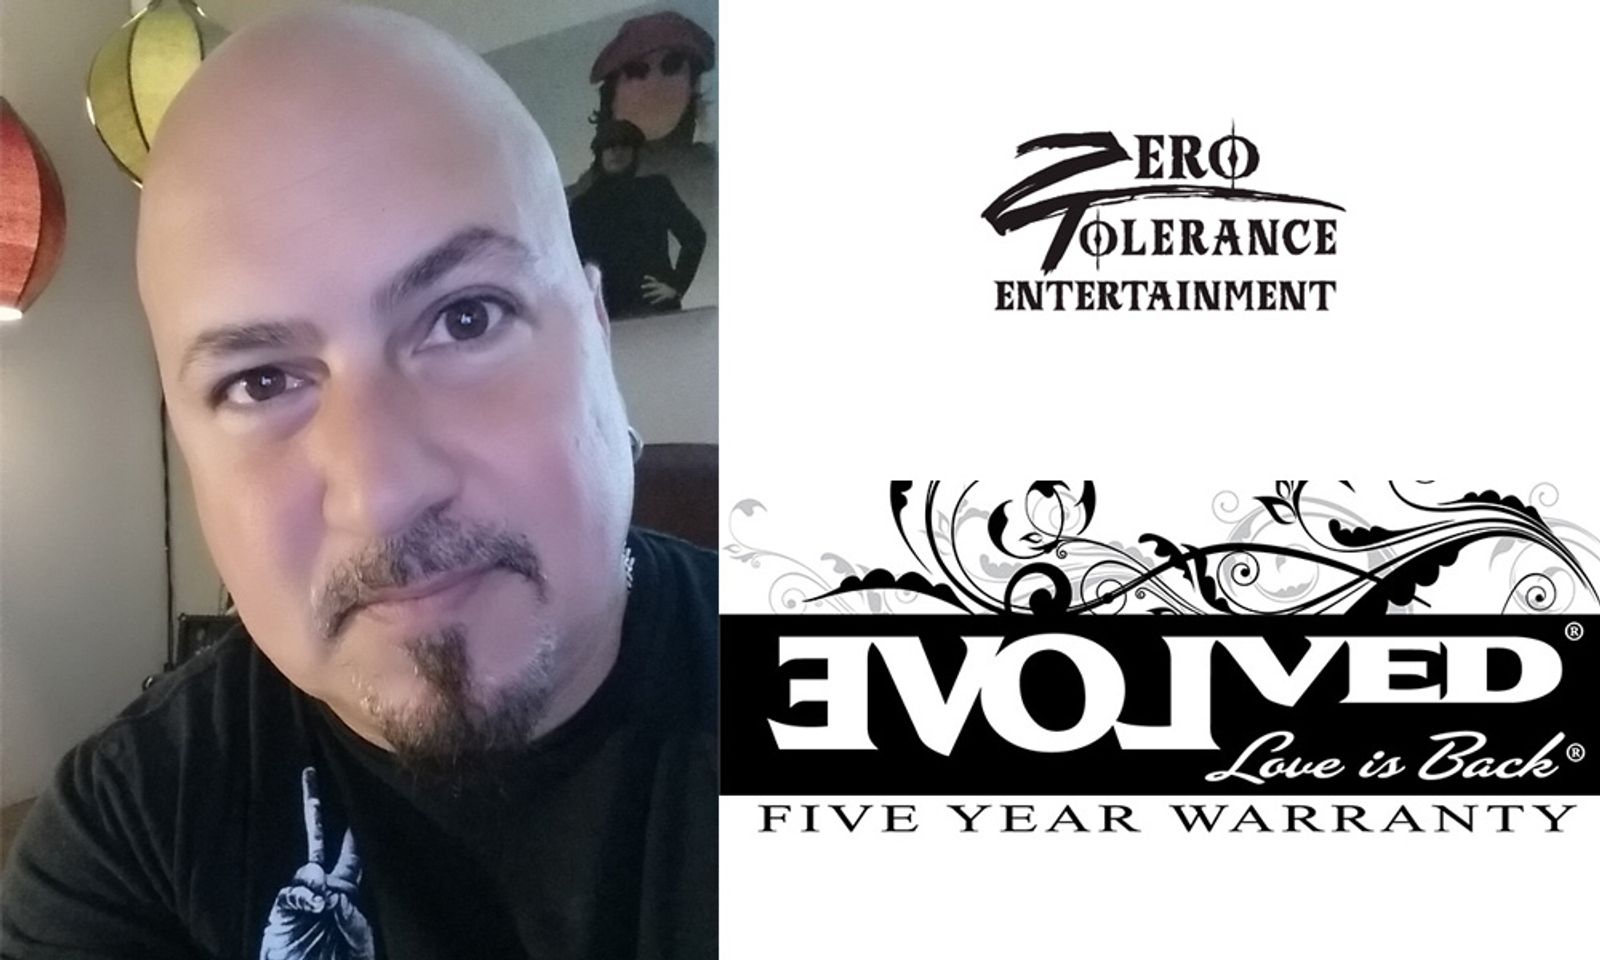 Steve Volponi Joins Zero Tolerance, Evolved Novelties